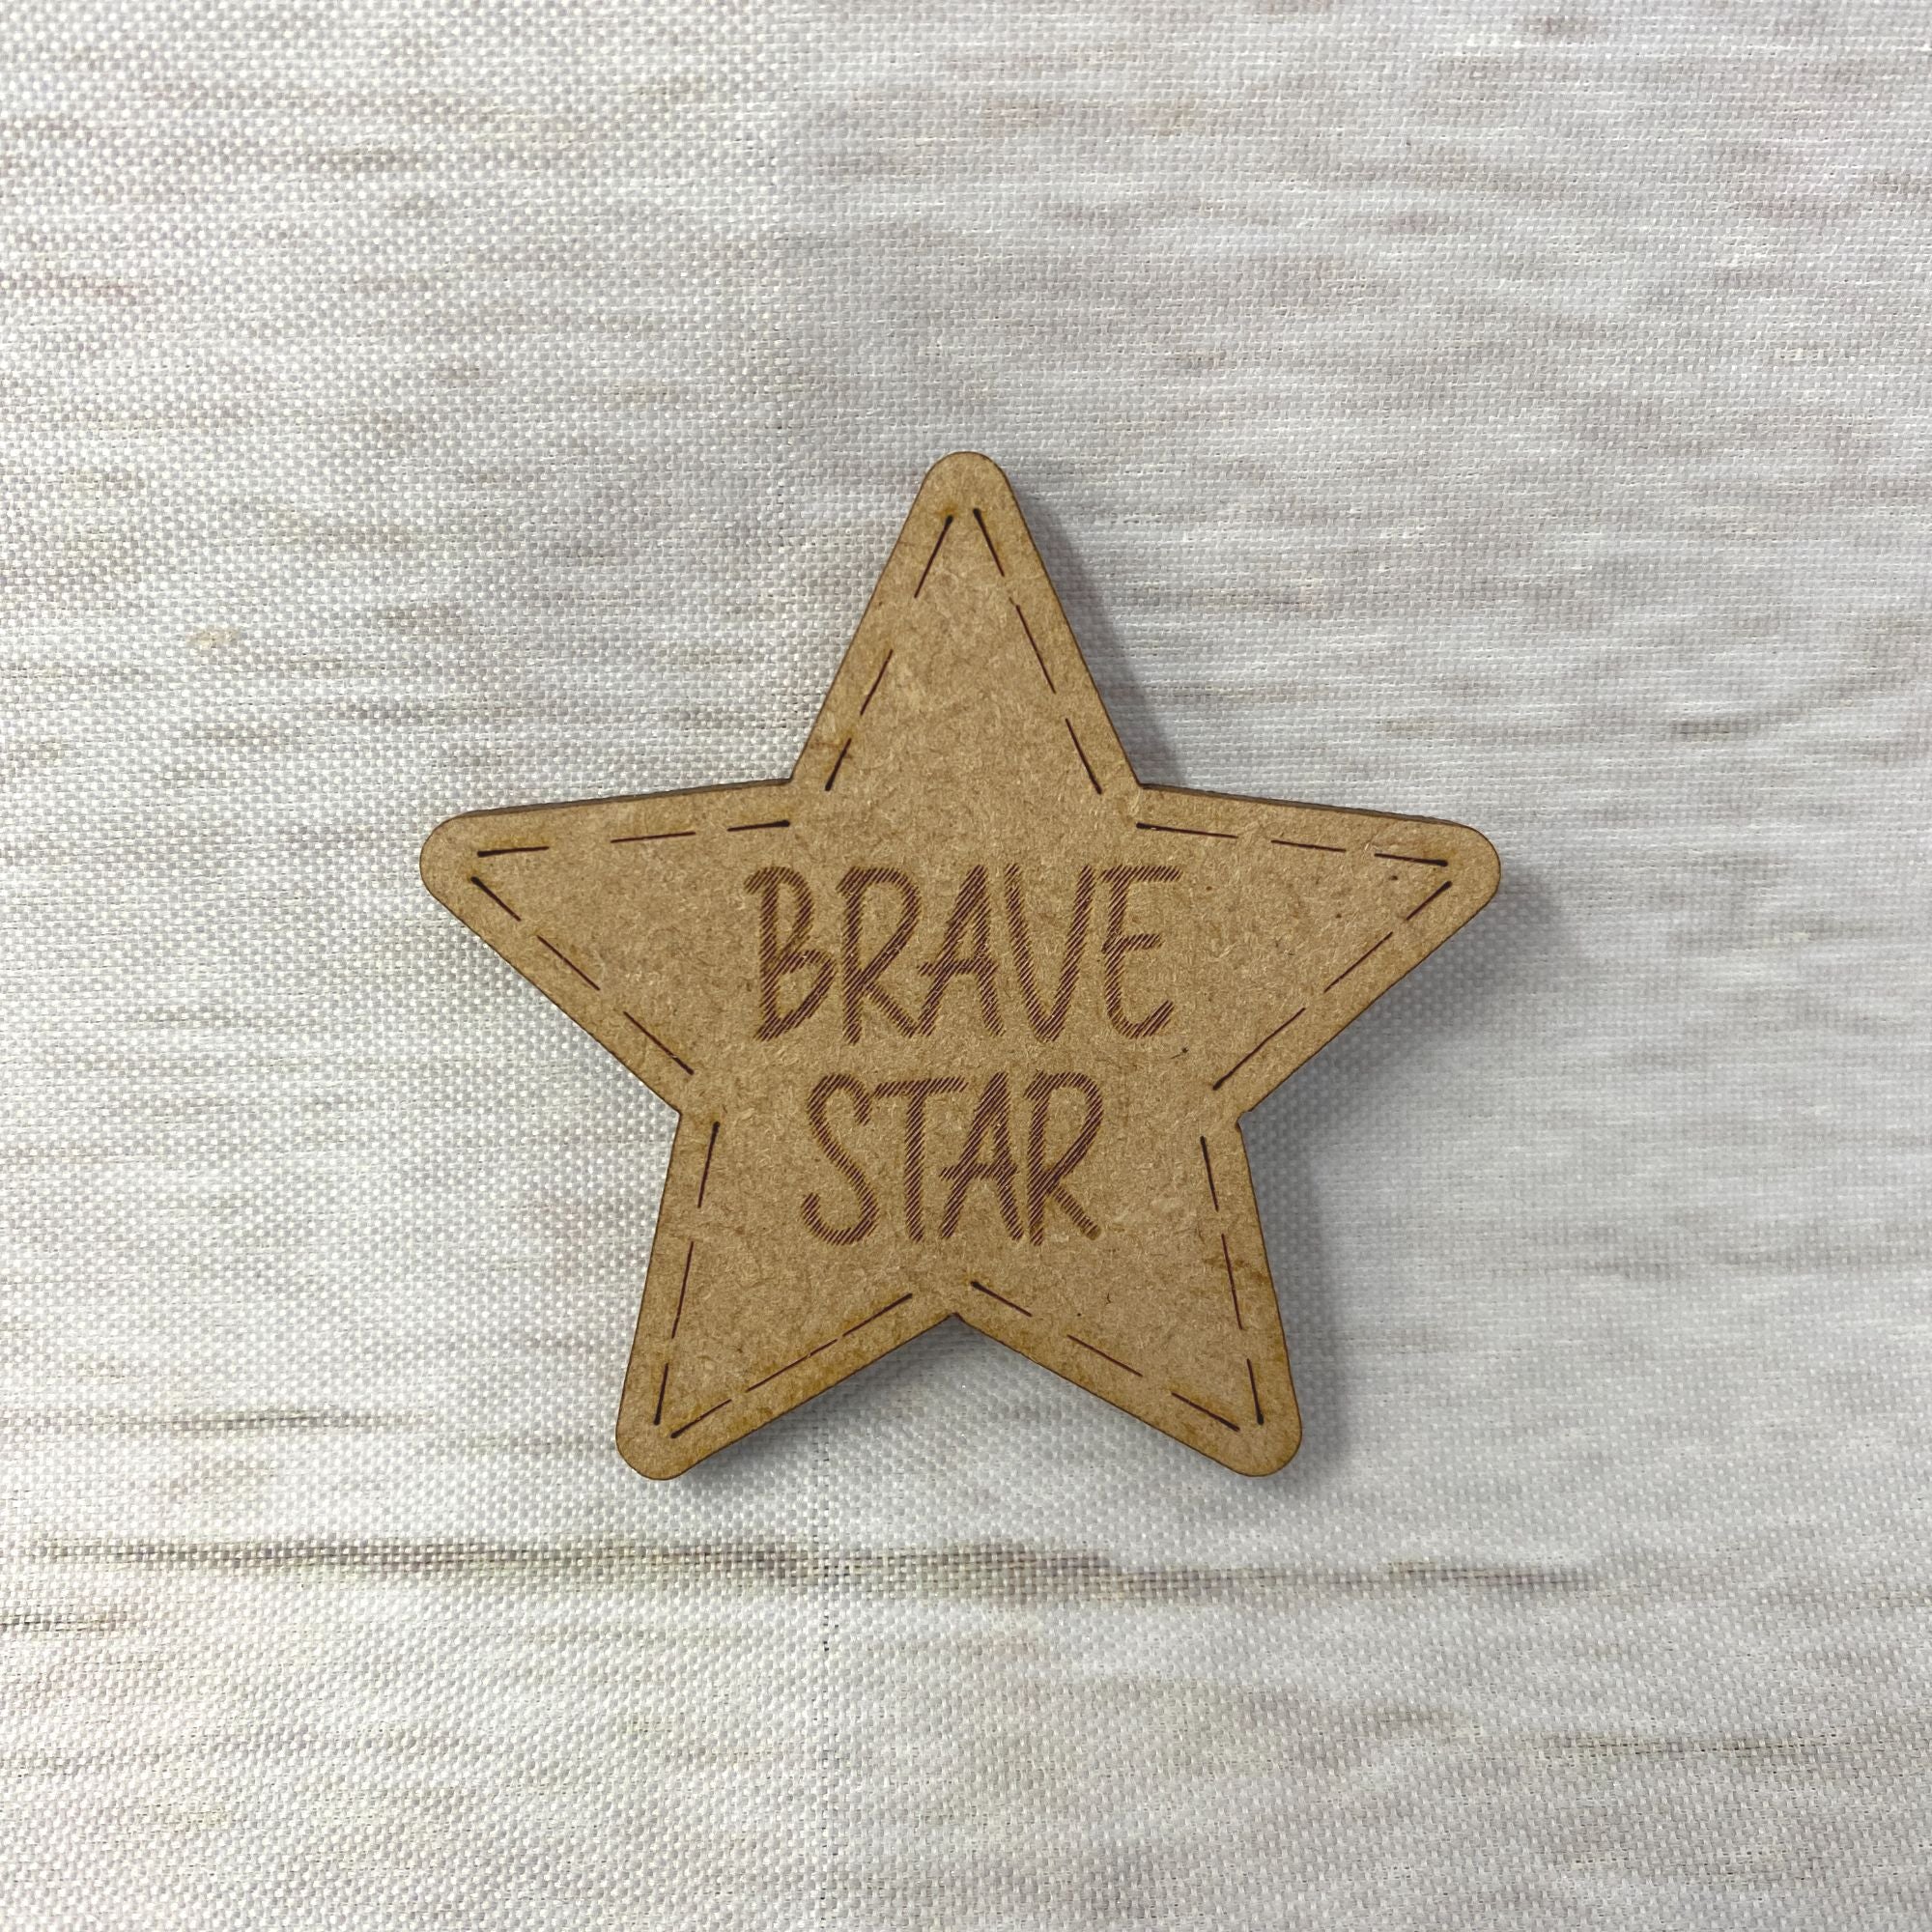 Brave Star - Engraved